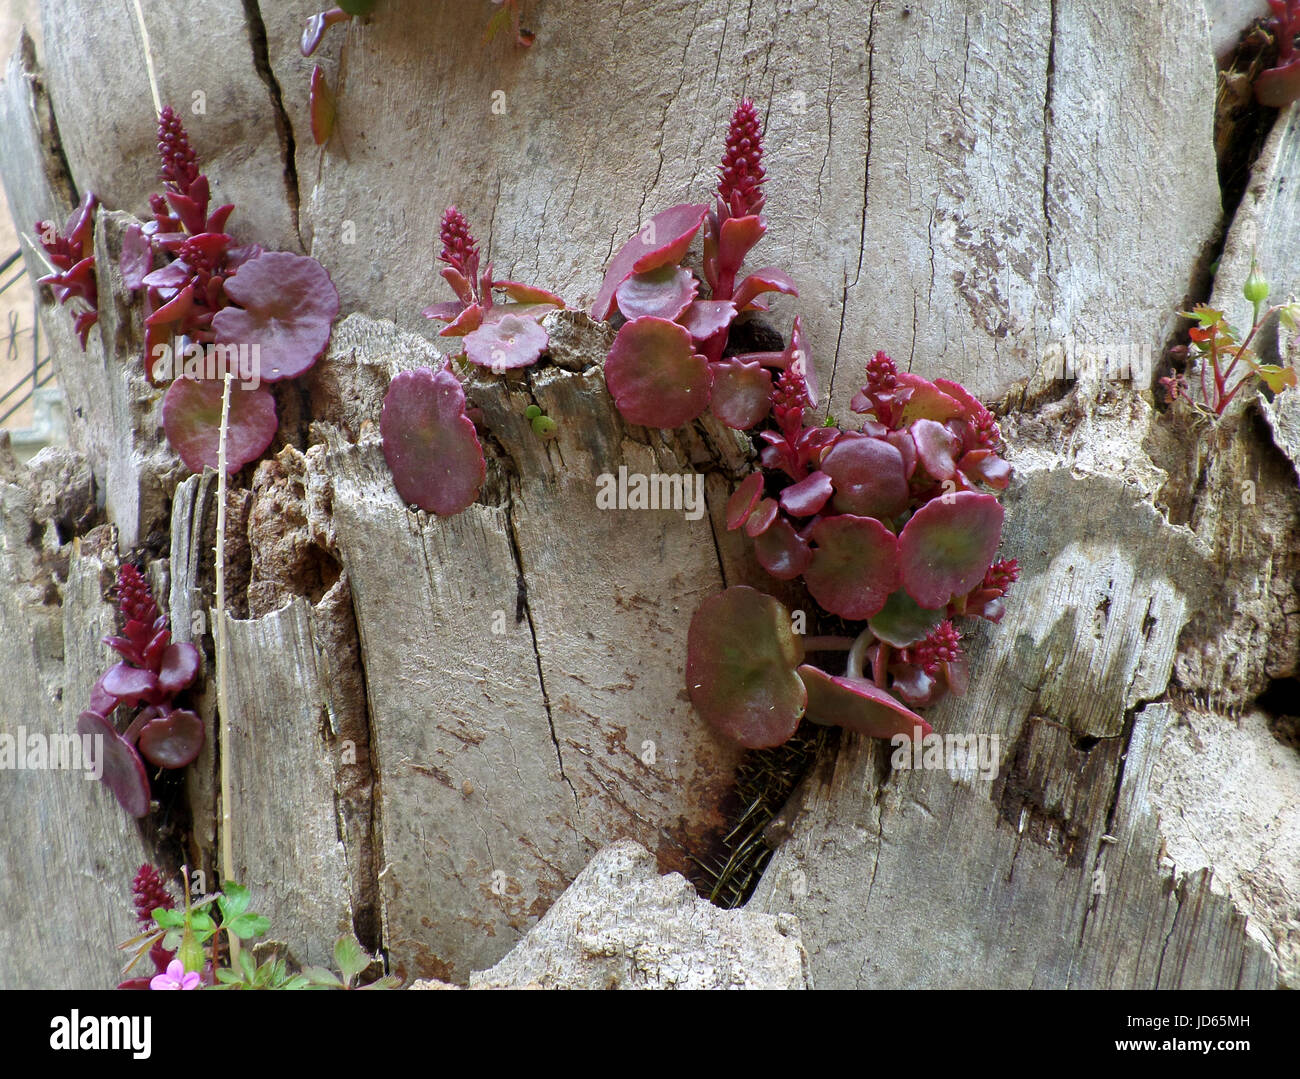 Purple Jelly Disc Mushroom (Ascocoryne sarcoides) on Tree Trunk, Crete Island of Greece Stock Photo